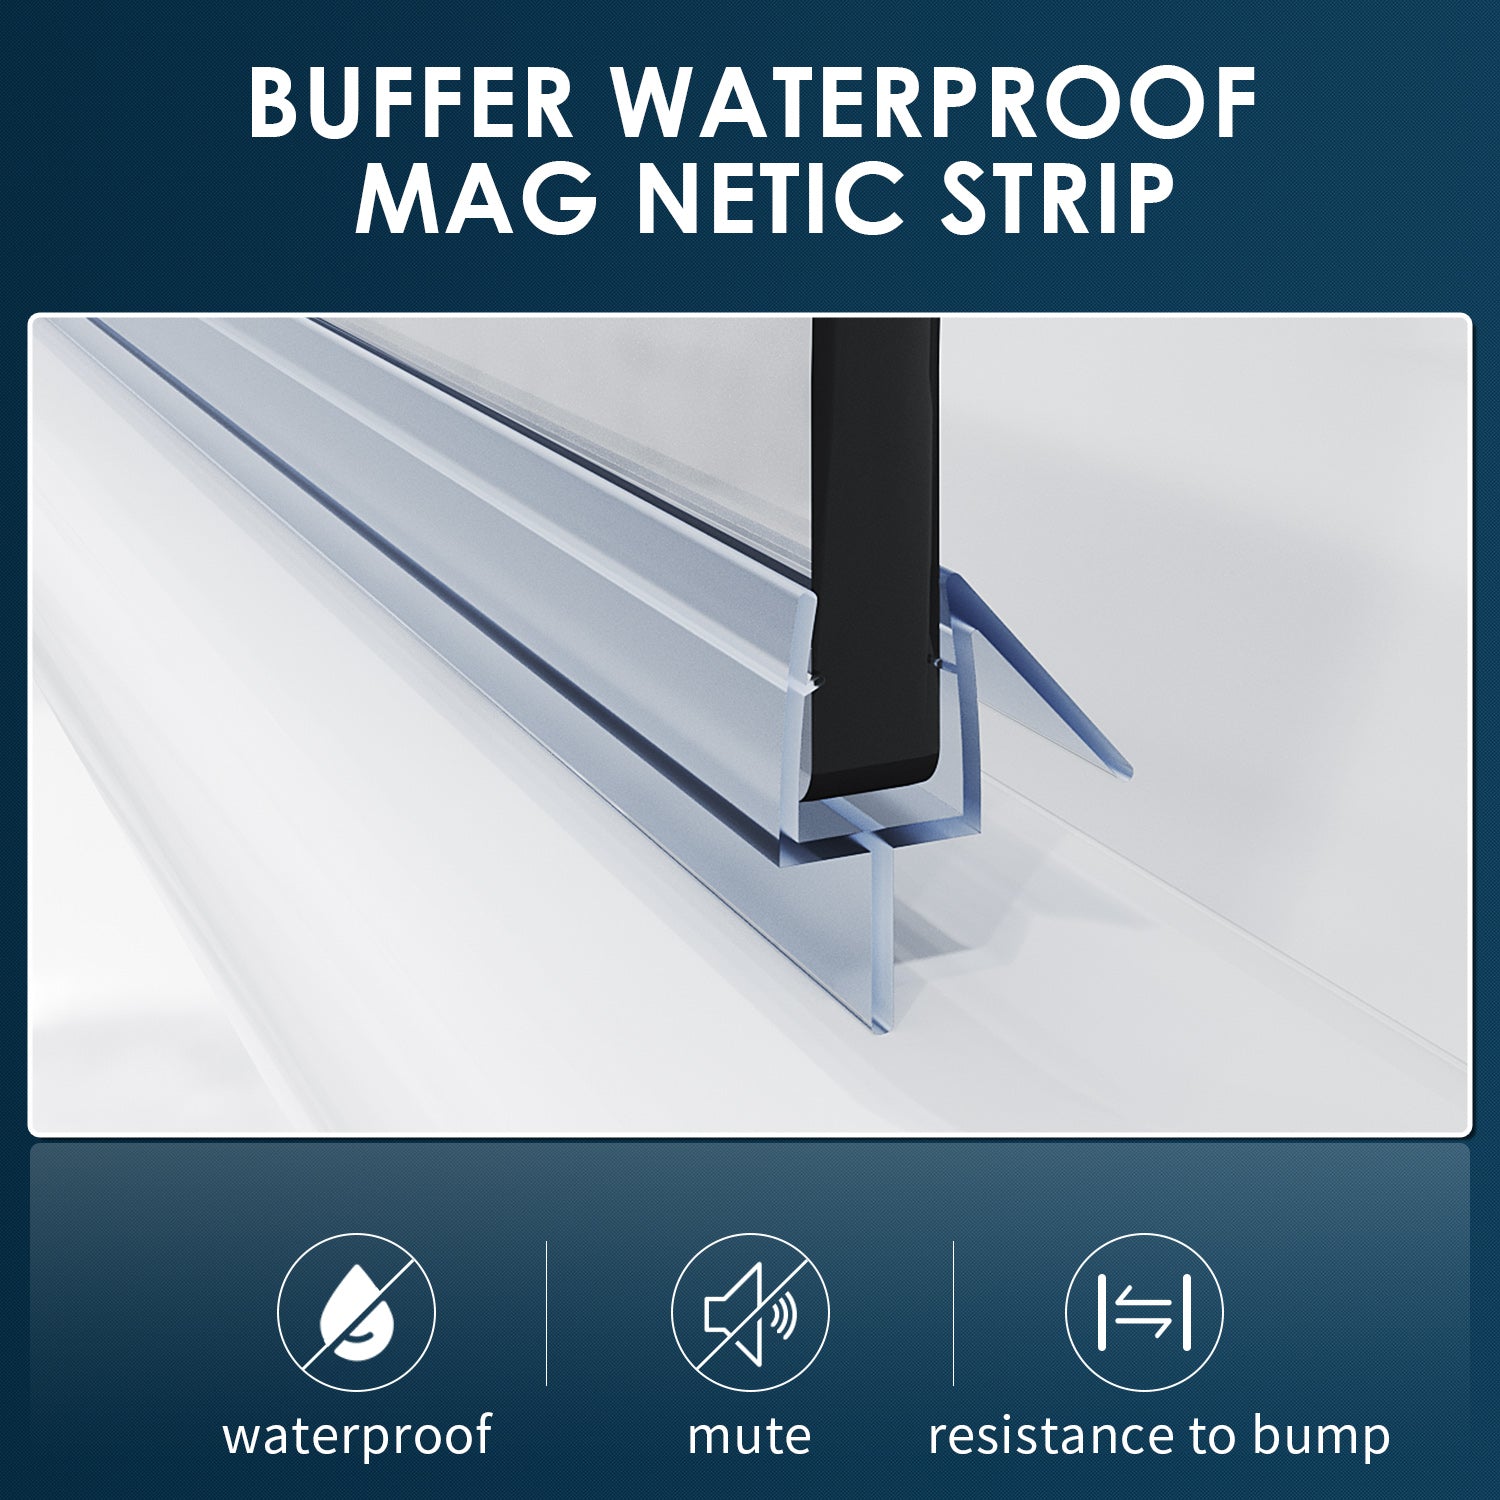 SUNNY SHOWER Buffer Waterproof Mag Netic Strip